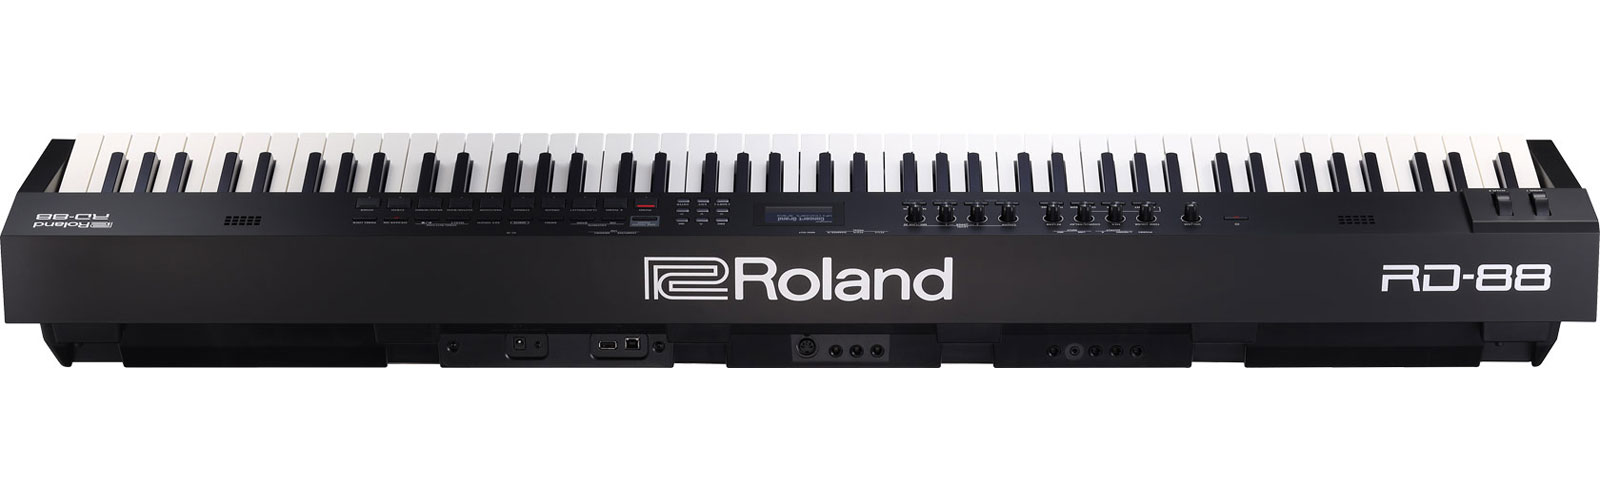 Roland RD-88 Stage keyboard